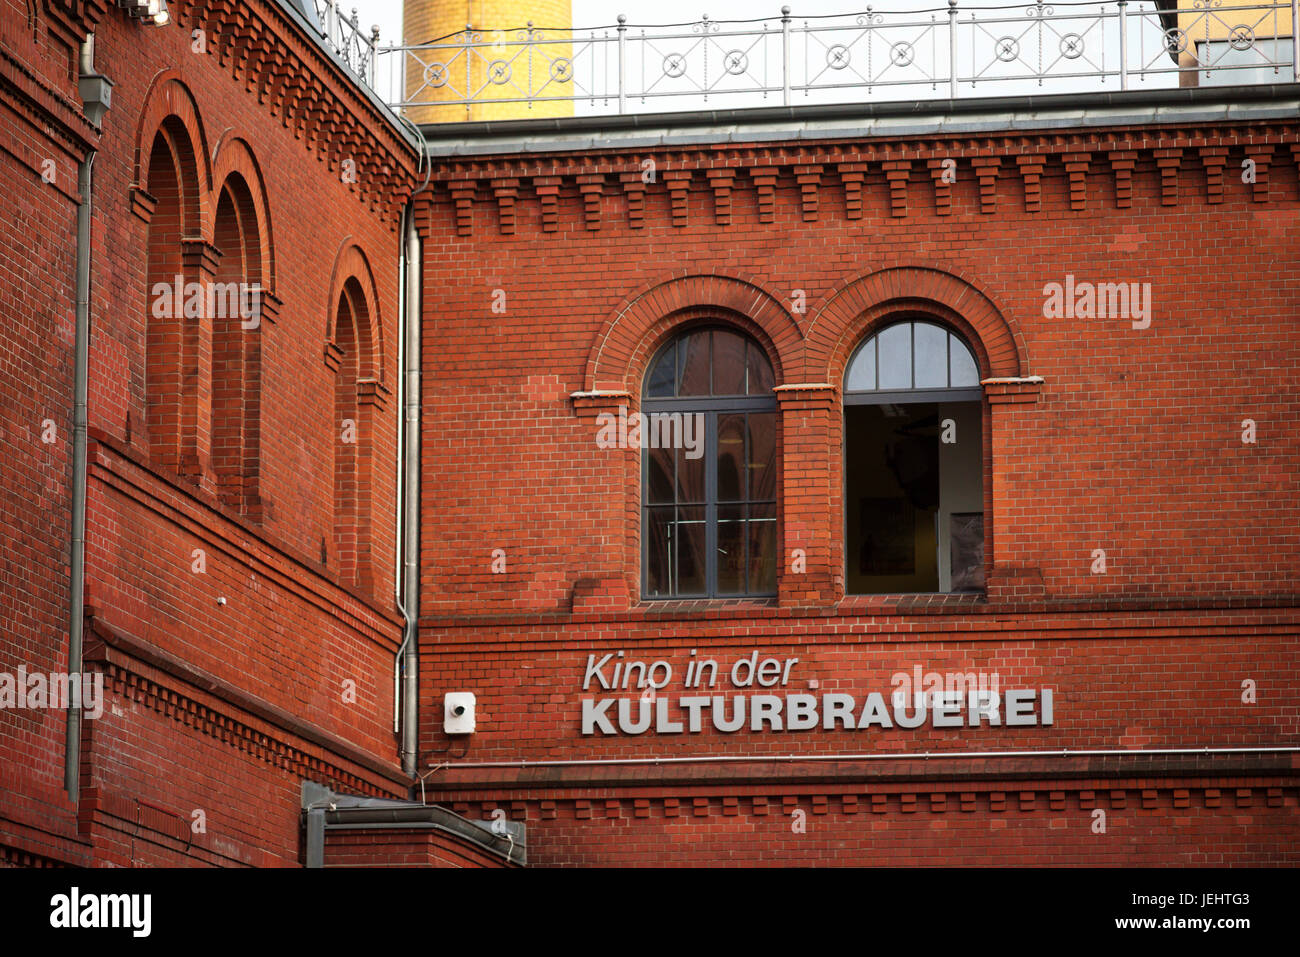 Kino in der Kulturbrauerei - cinema nella Kulturbrauerei in Berlin Prenzlauer Berg, Germania Foto Stock